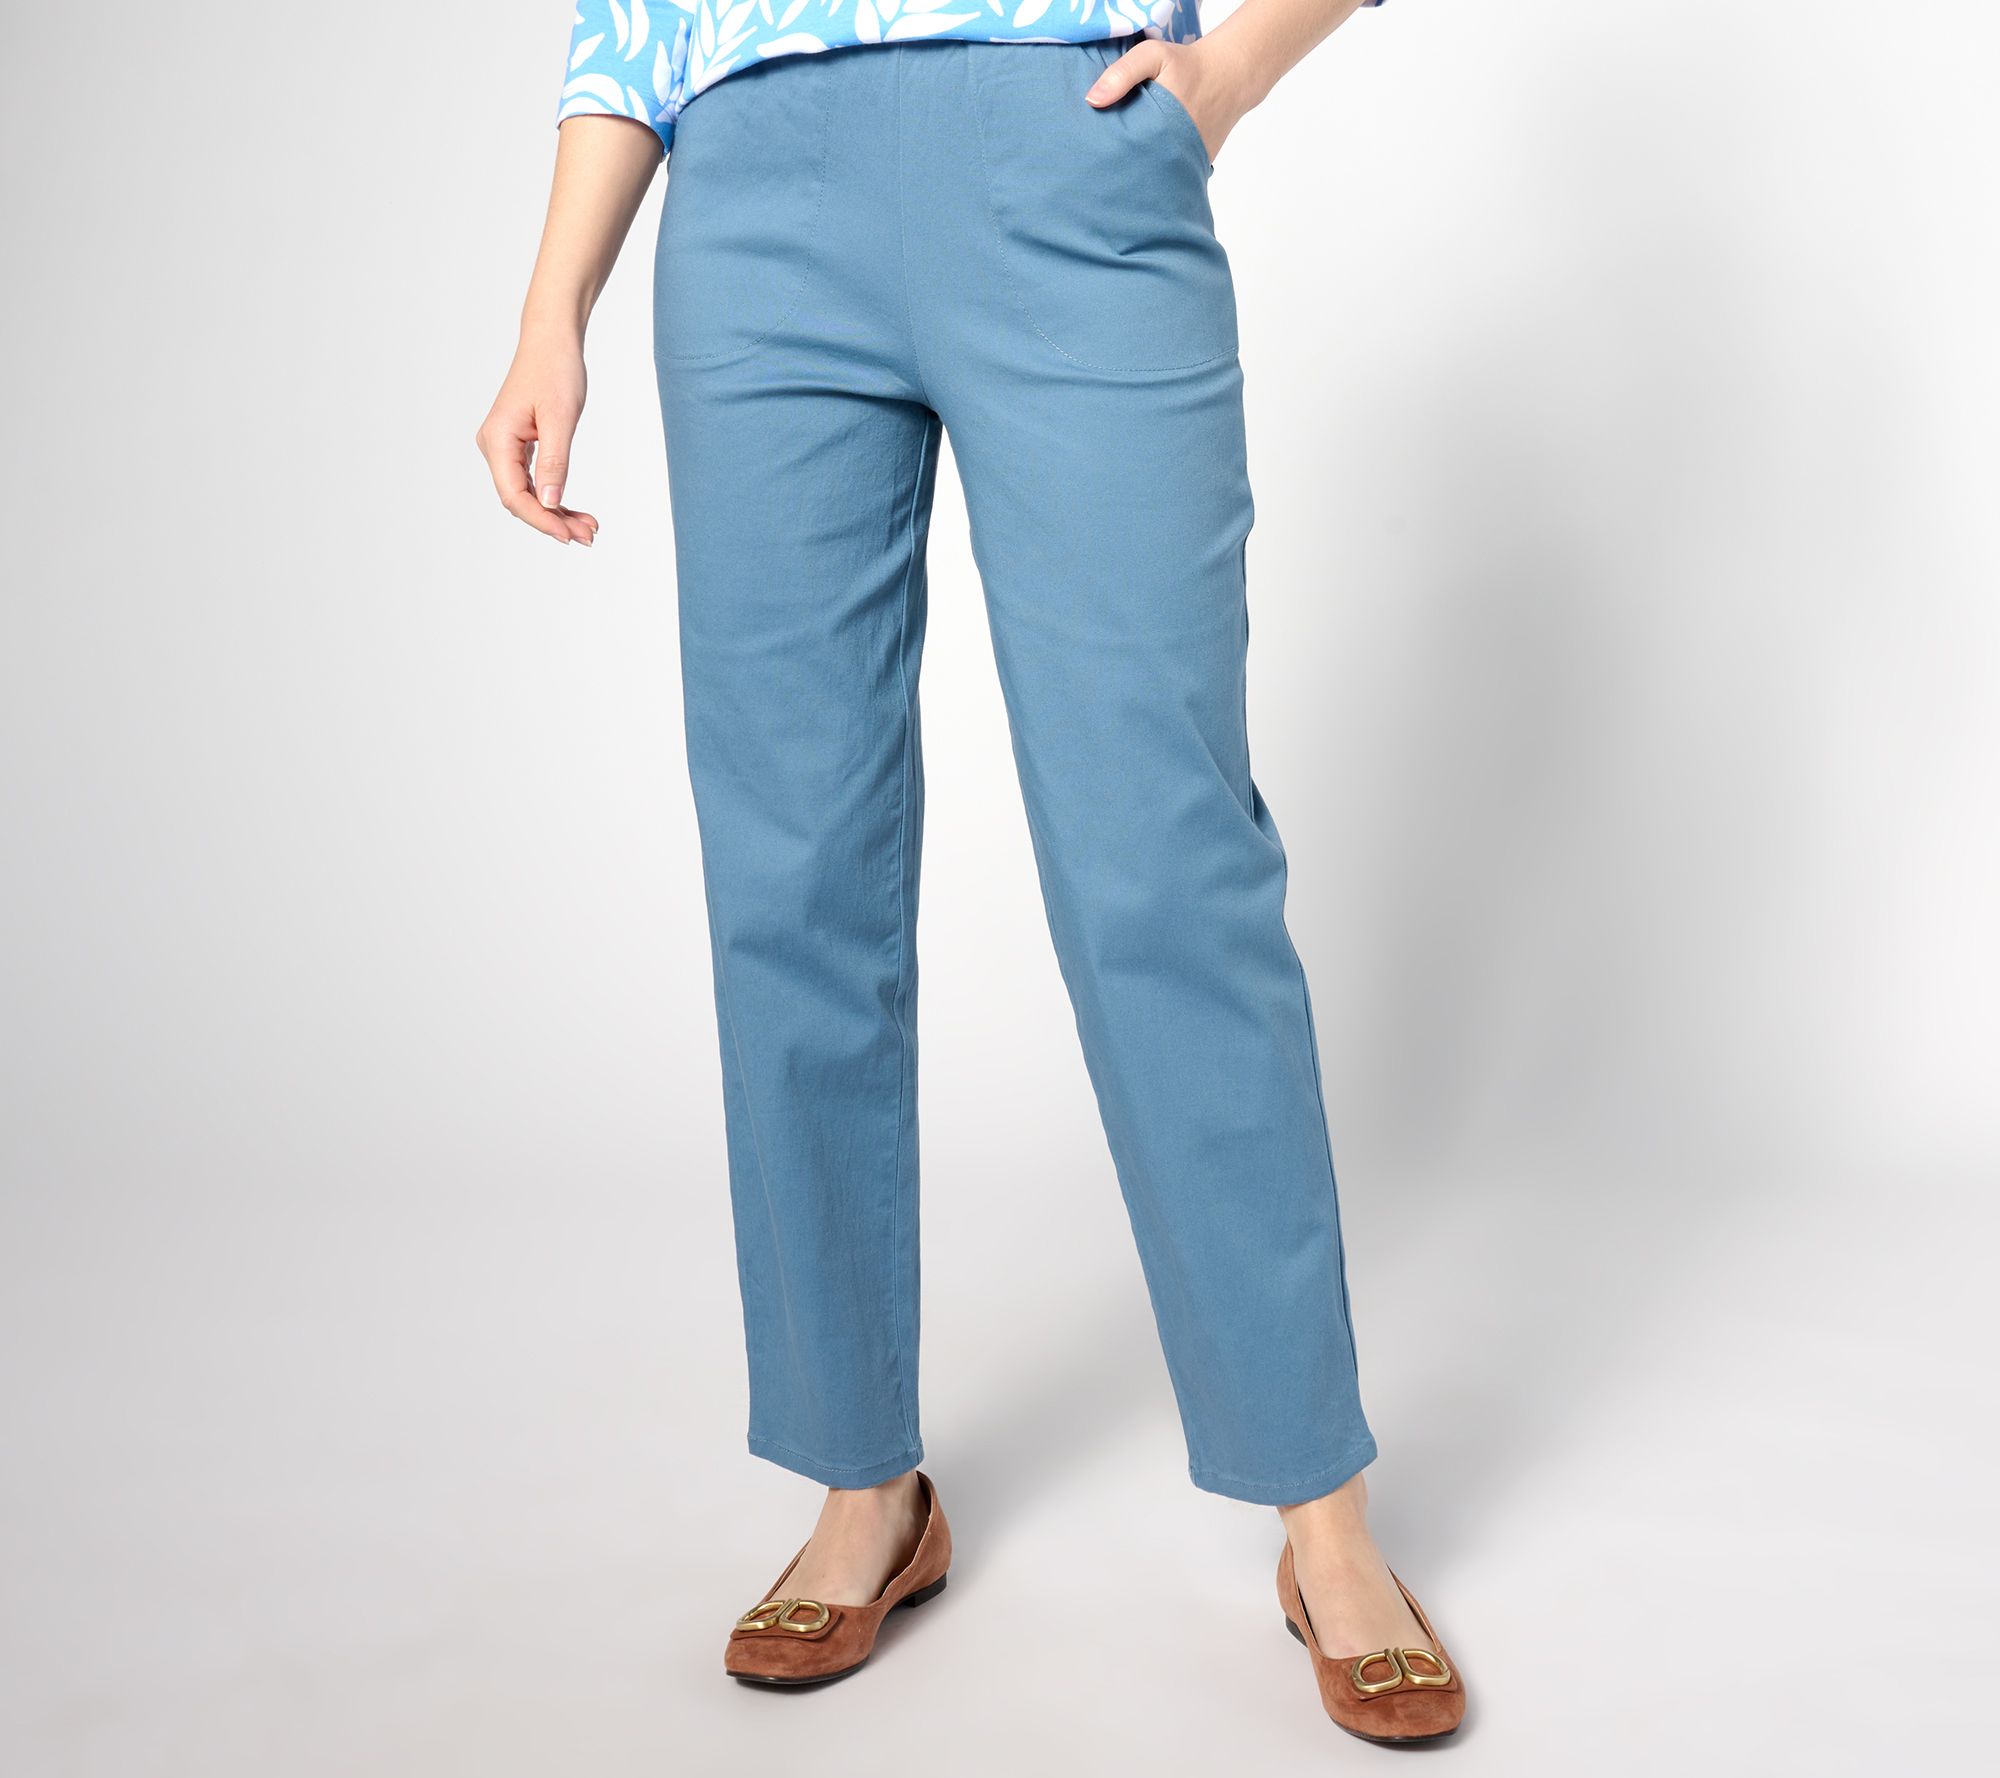 Denim & Co. Original Waist Stretch Regular Side Pocket Pant